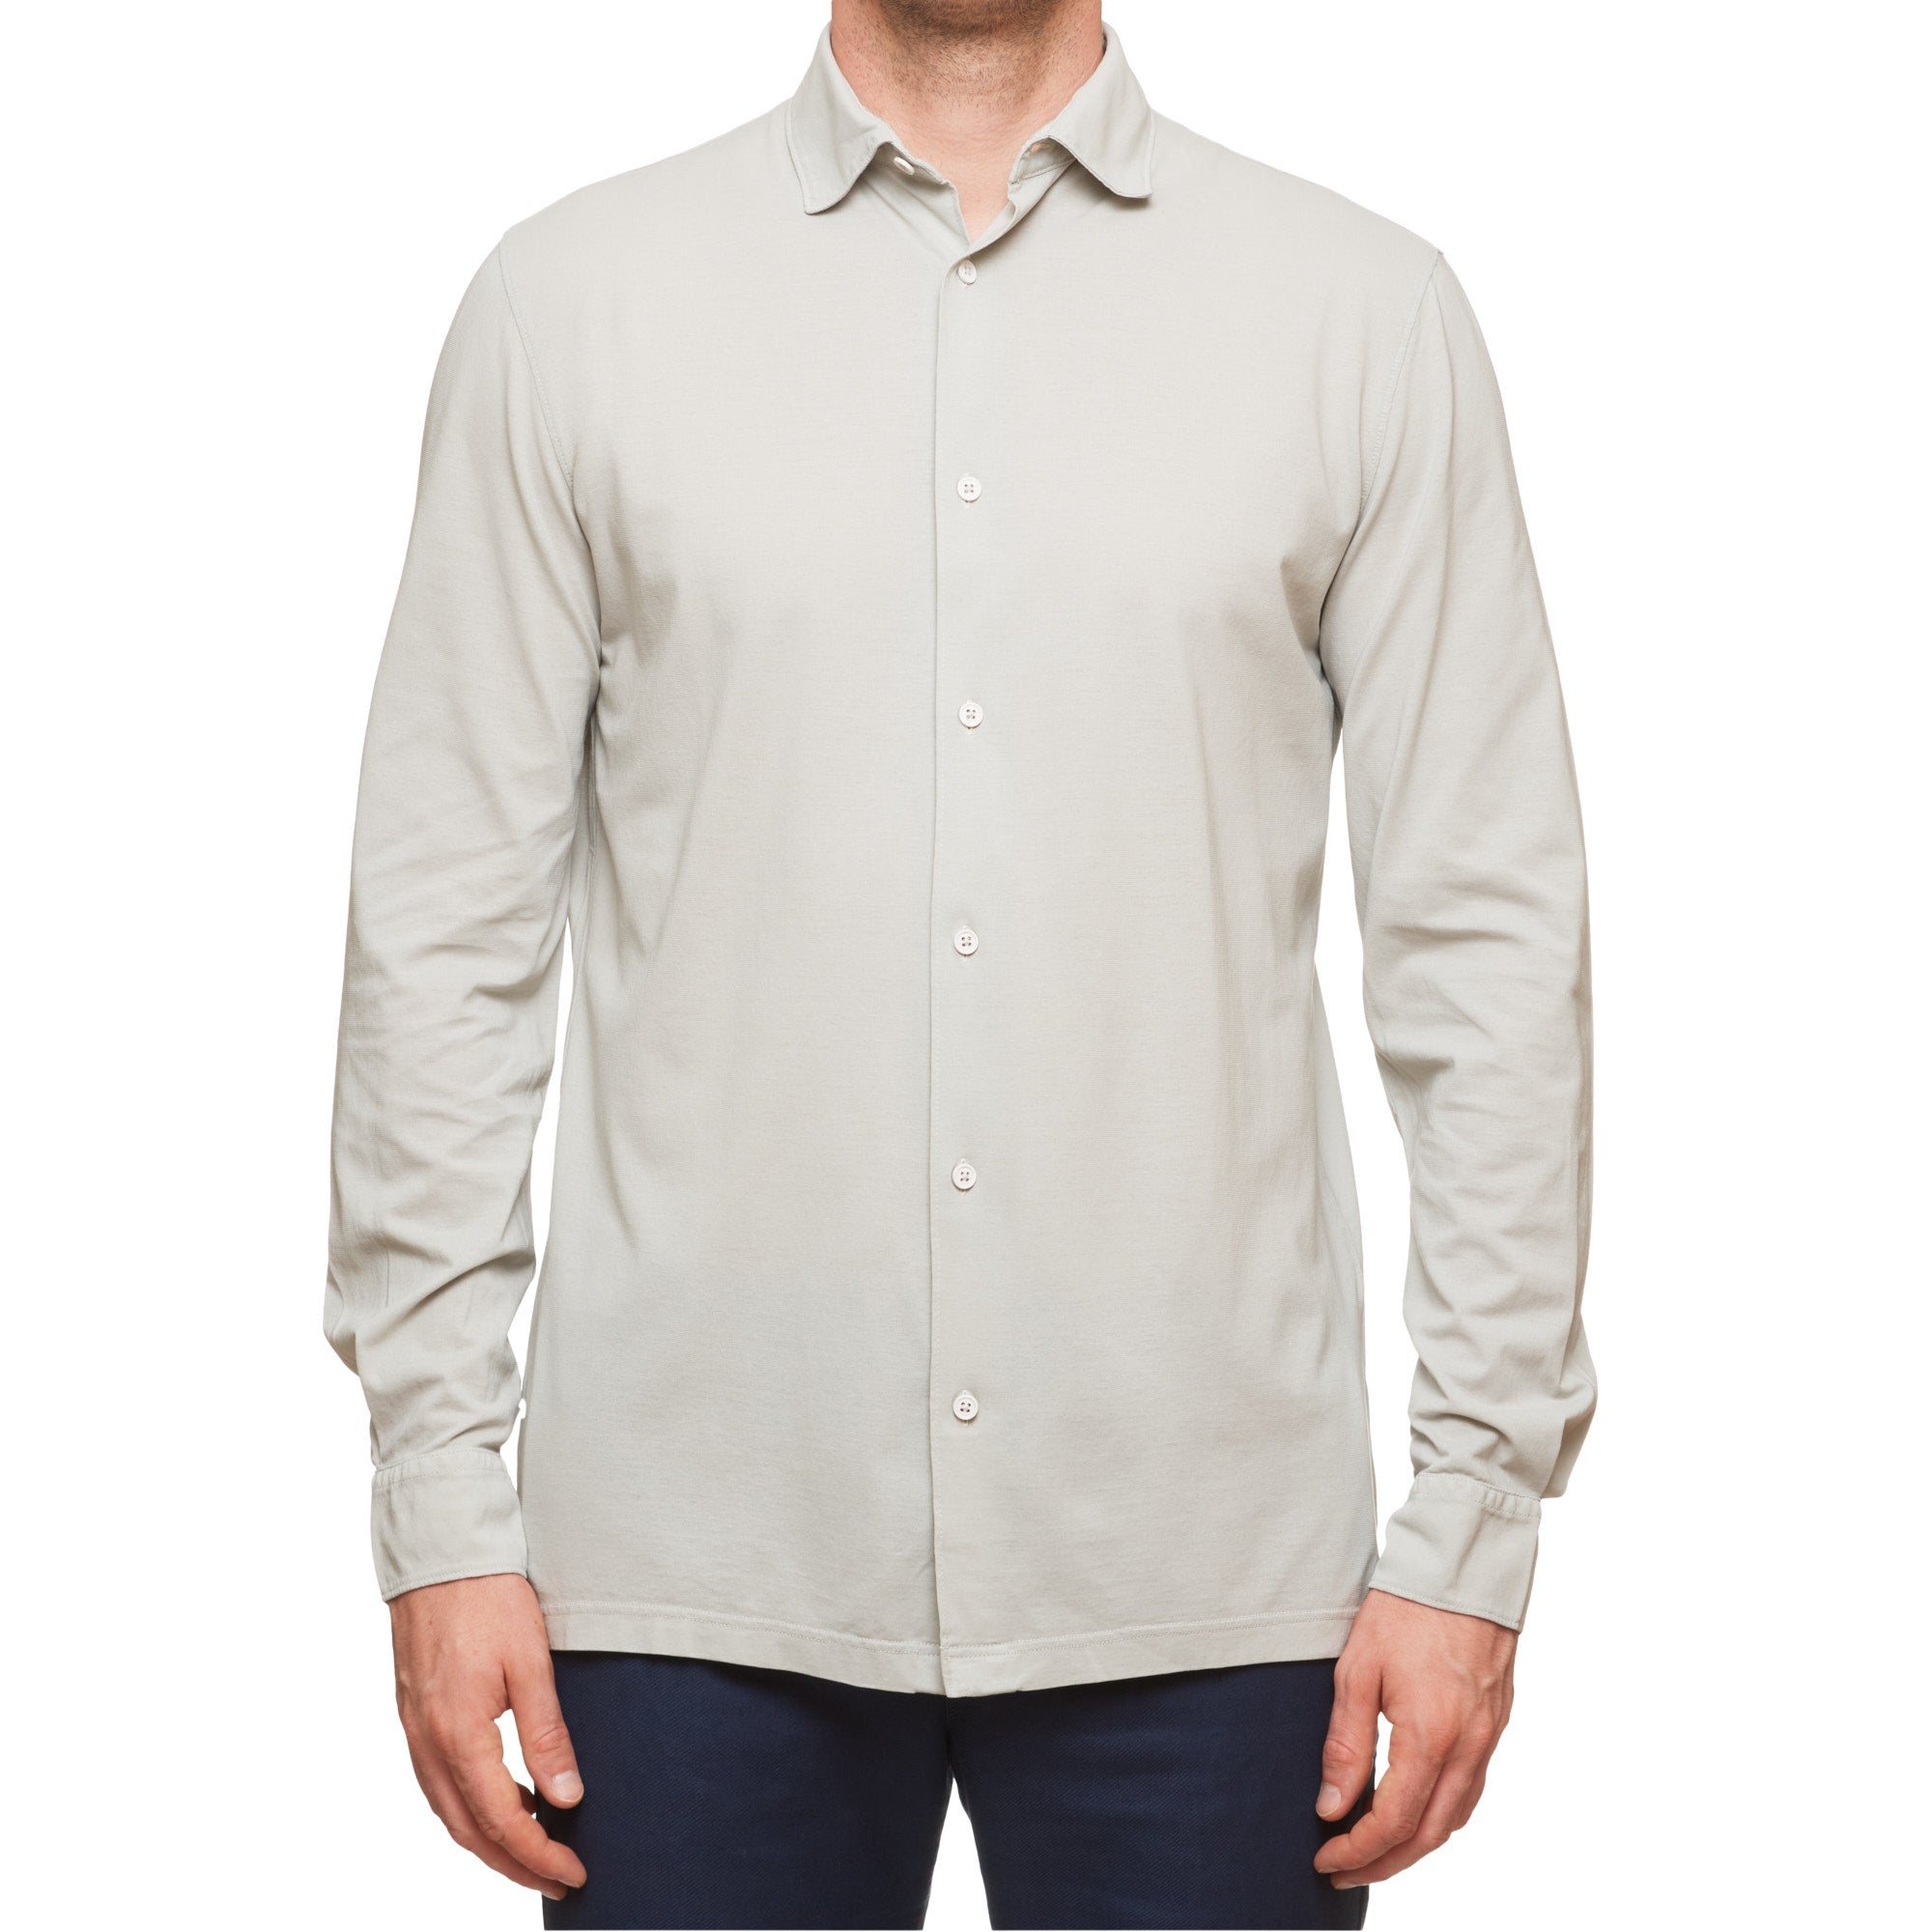 Kiton KIRED "Capriml" Gray Exclusive Crepe Cotton Long Sleeve Polo Shirt 52 L 2023 KIRED